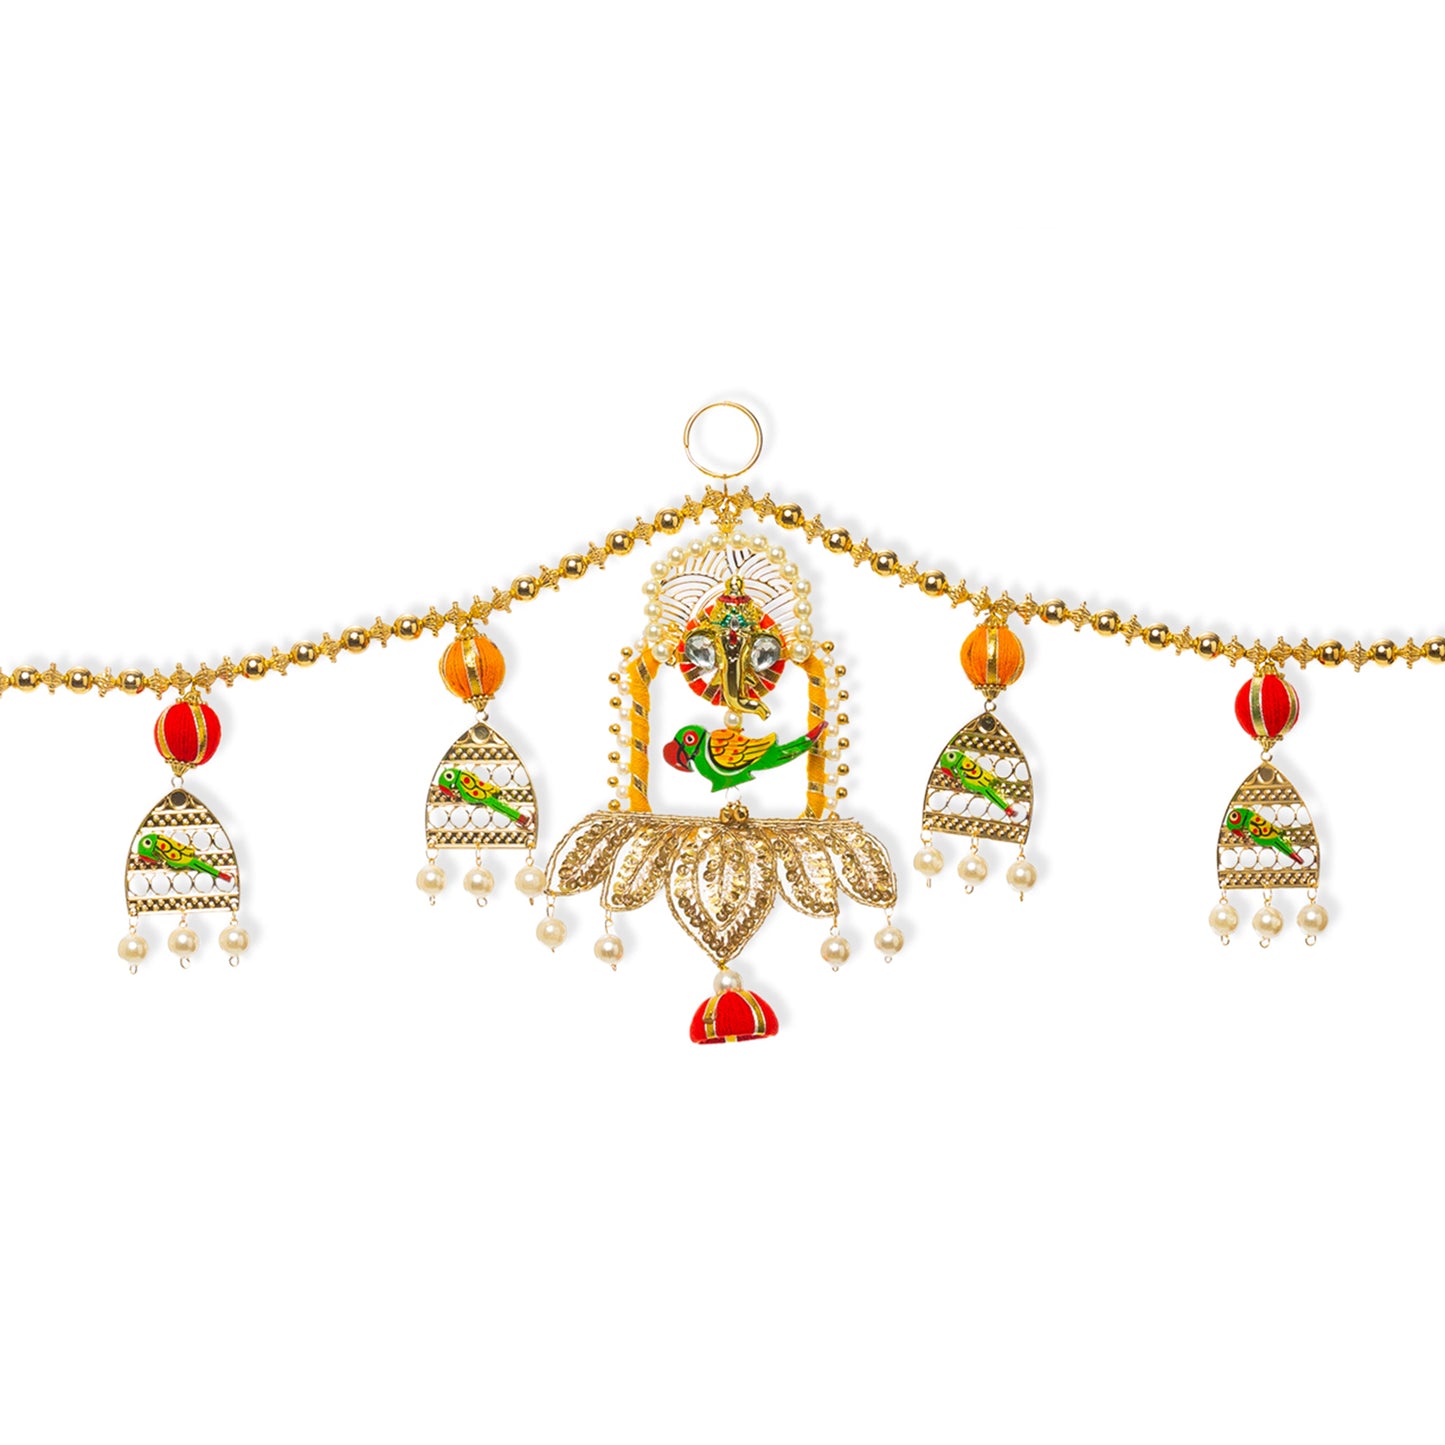 Digital Dress Room Toran For Door Hangings Diwali Decoration Golden Pearl, Ganesha & Parrots (Orange & Red)